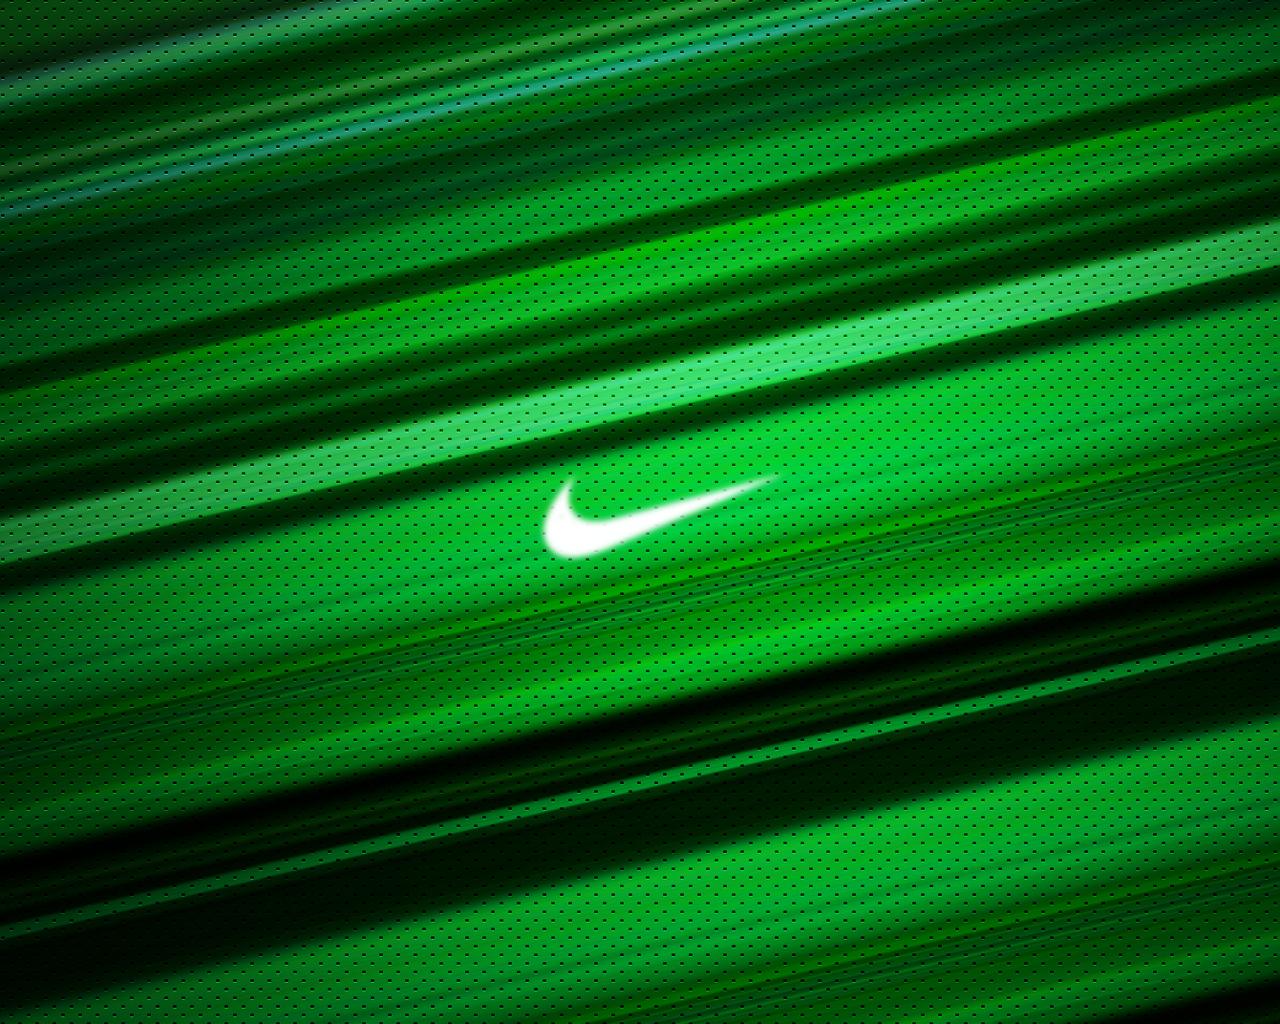 Nike Tropical Wallpapers